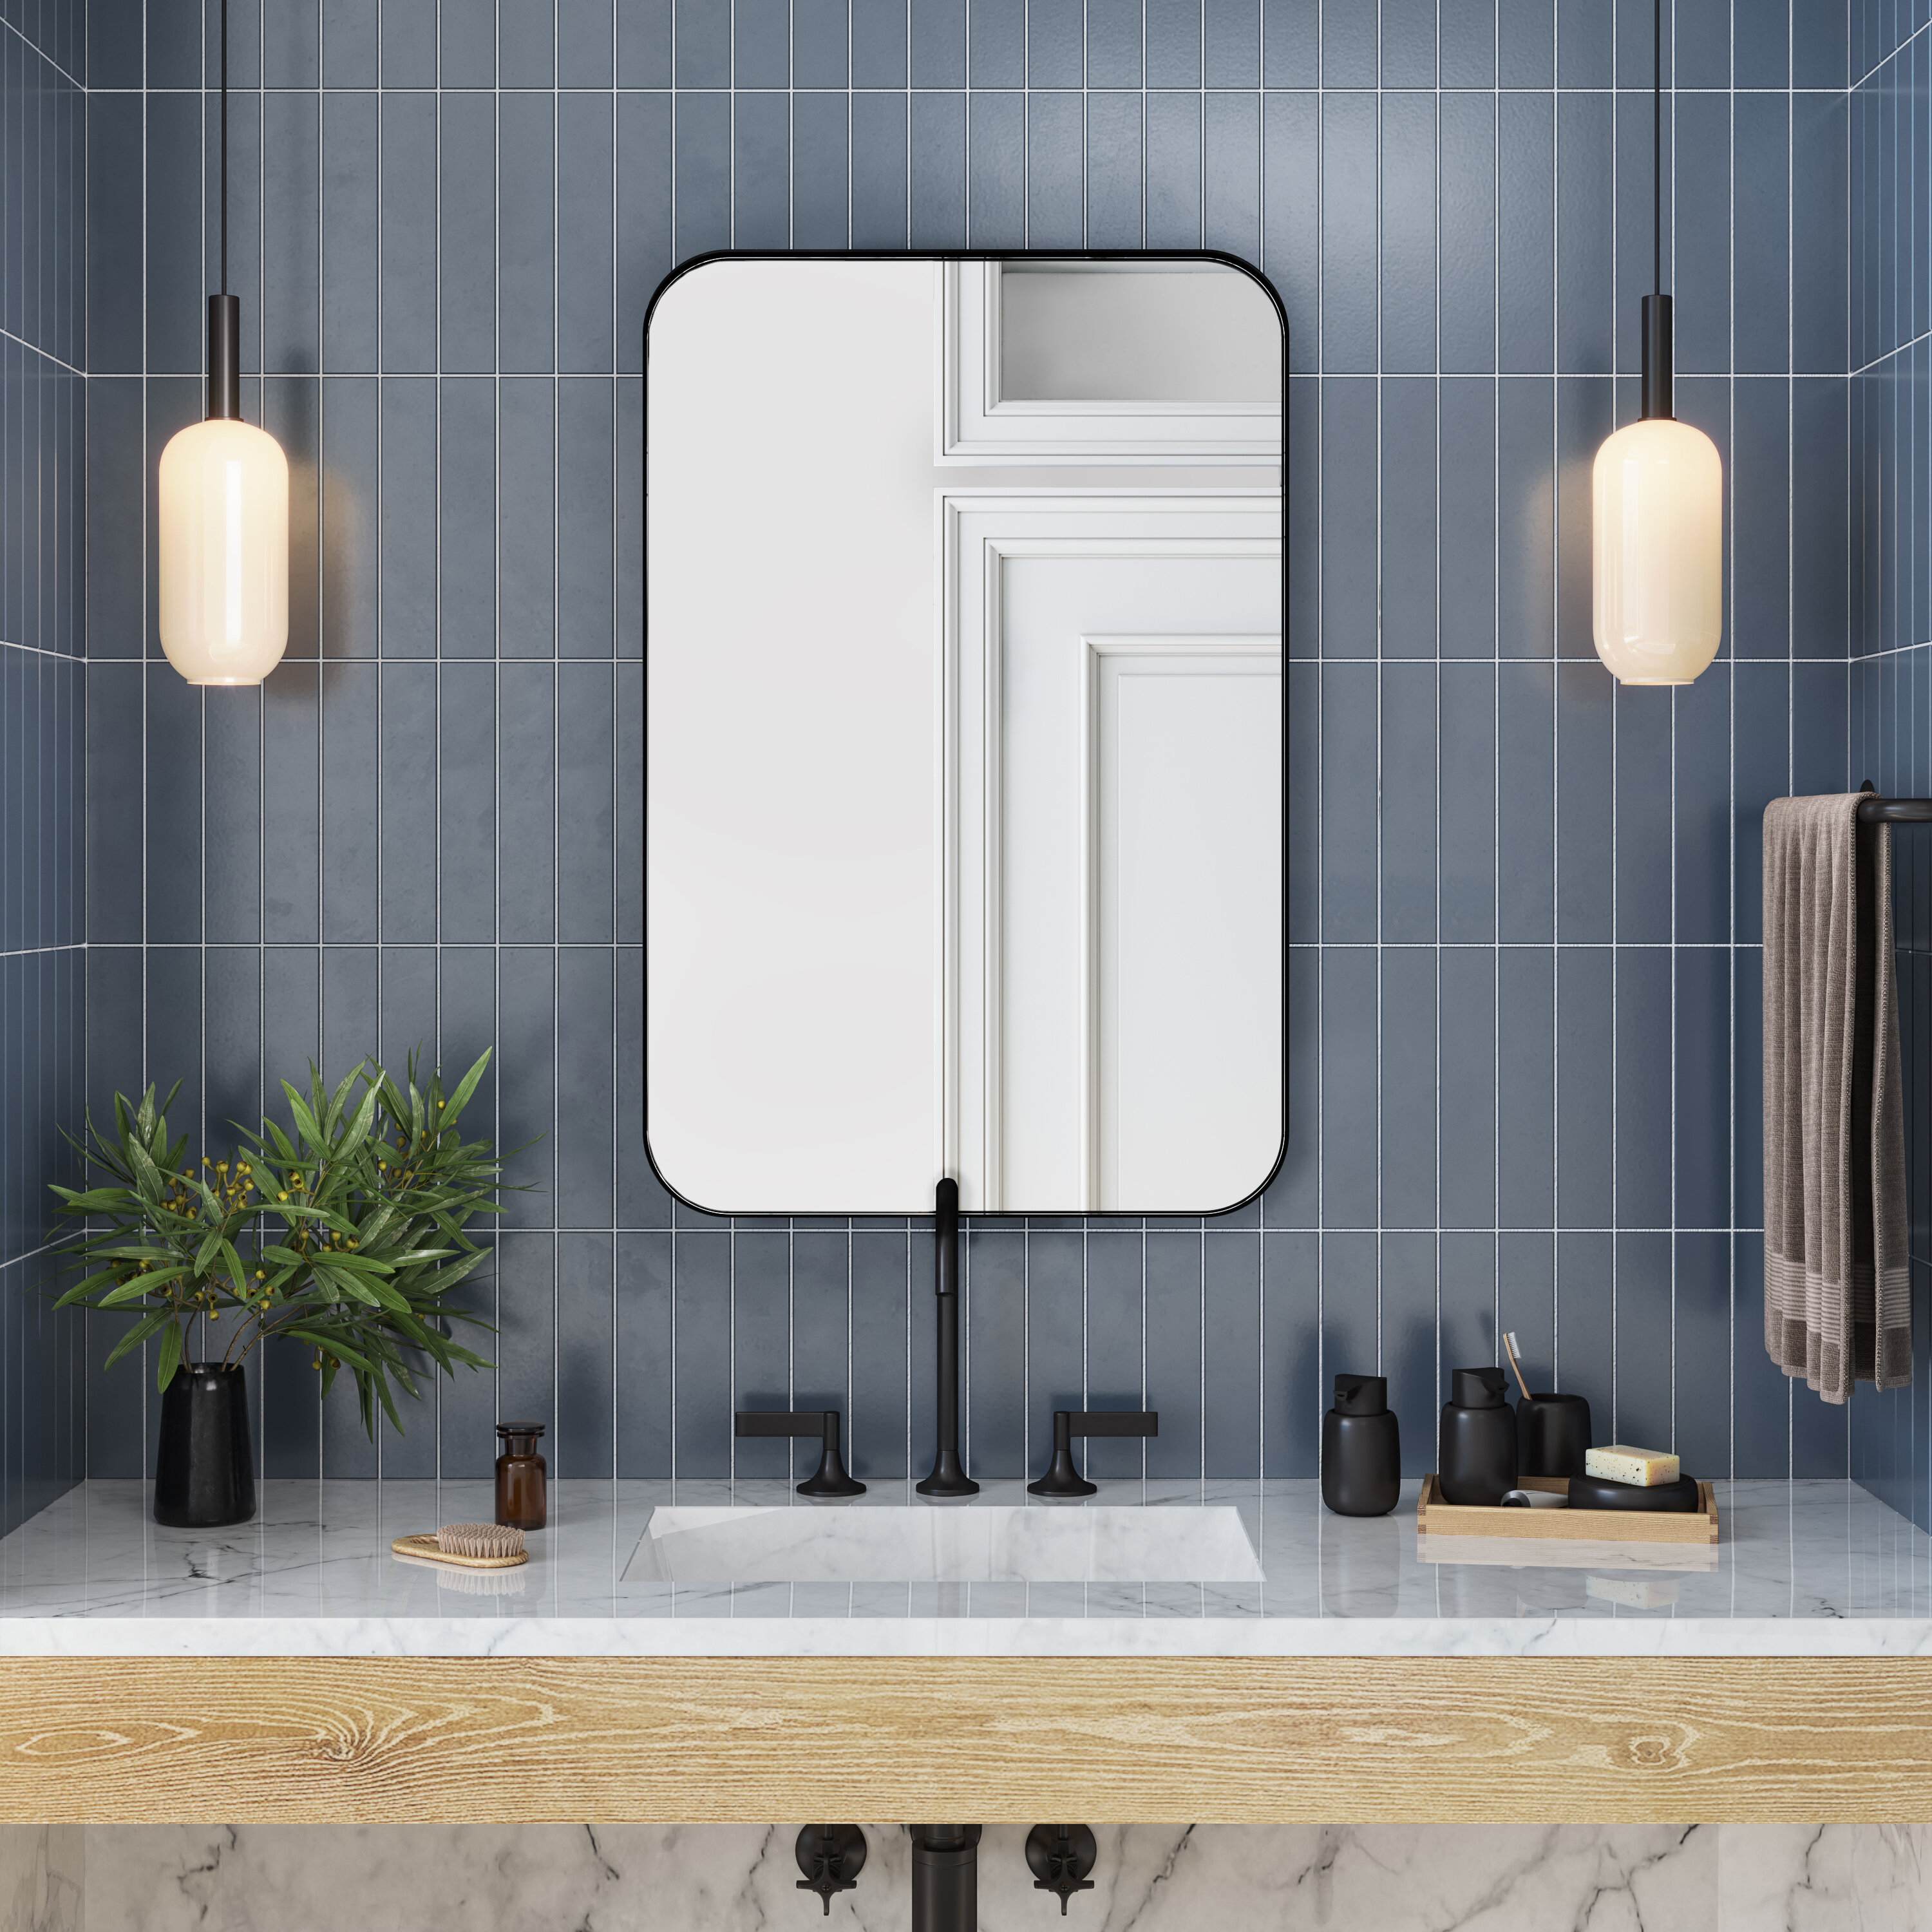 Orren Ellis Weeksville Modern And Contemporary Bathroom Vanity Mirror Reviews Wayfairca